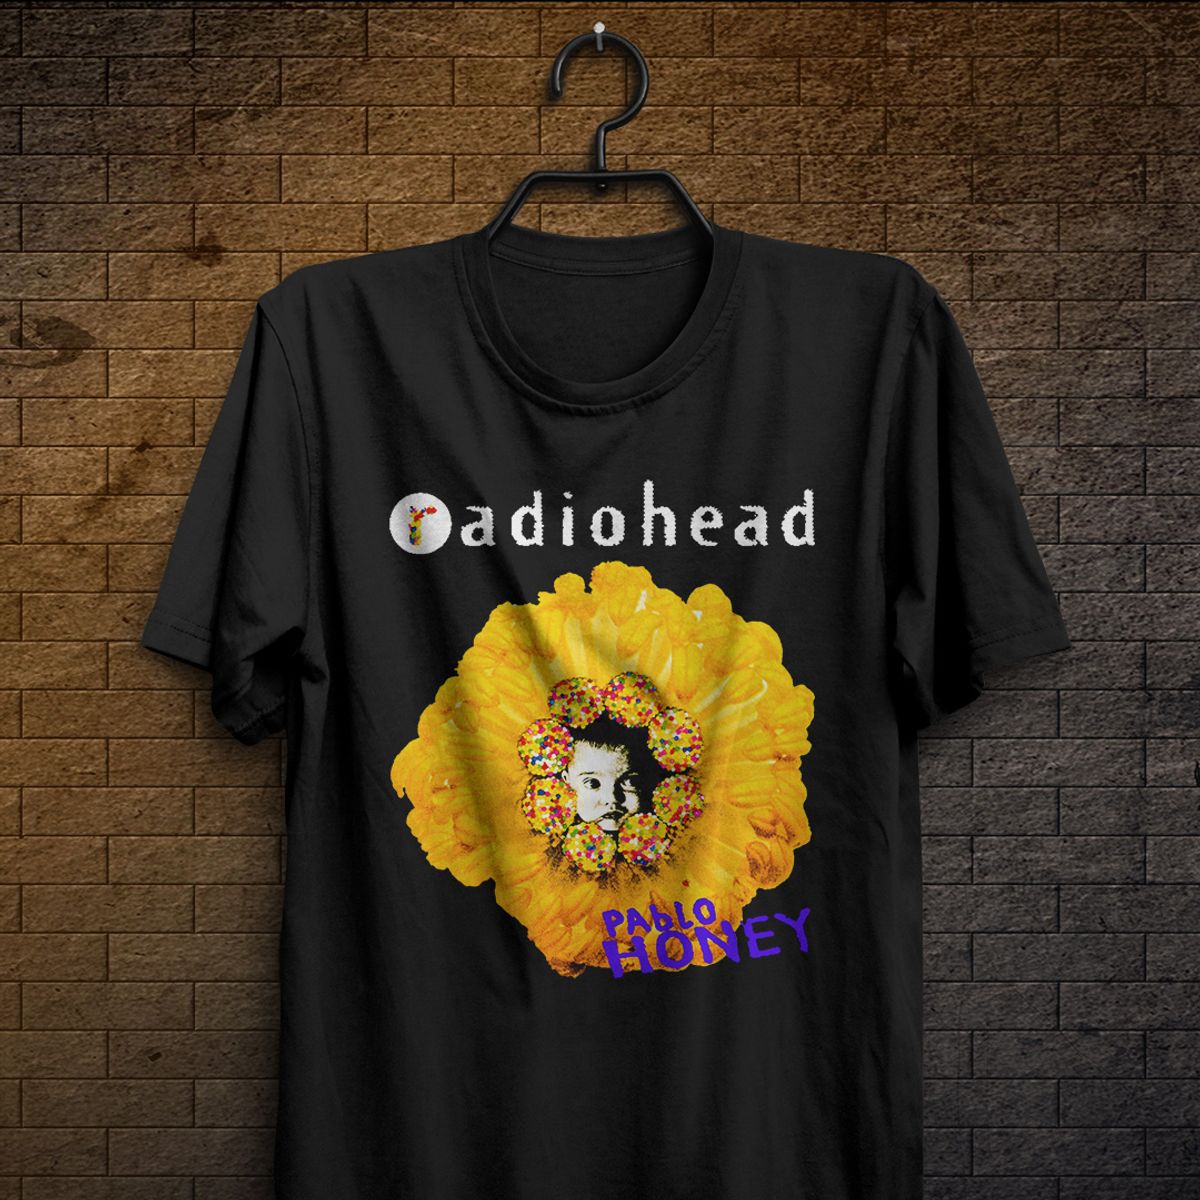 Nome do produto: Camiseta Radiohead - Pablo Honey - Logo Branco